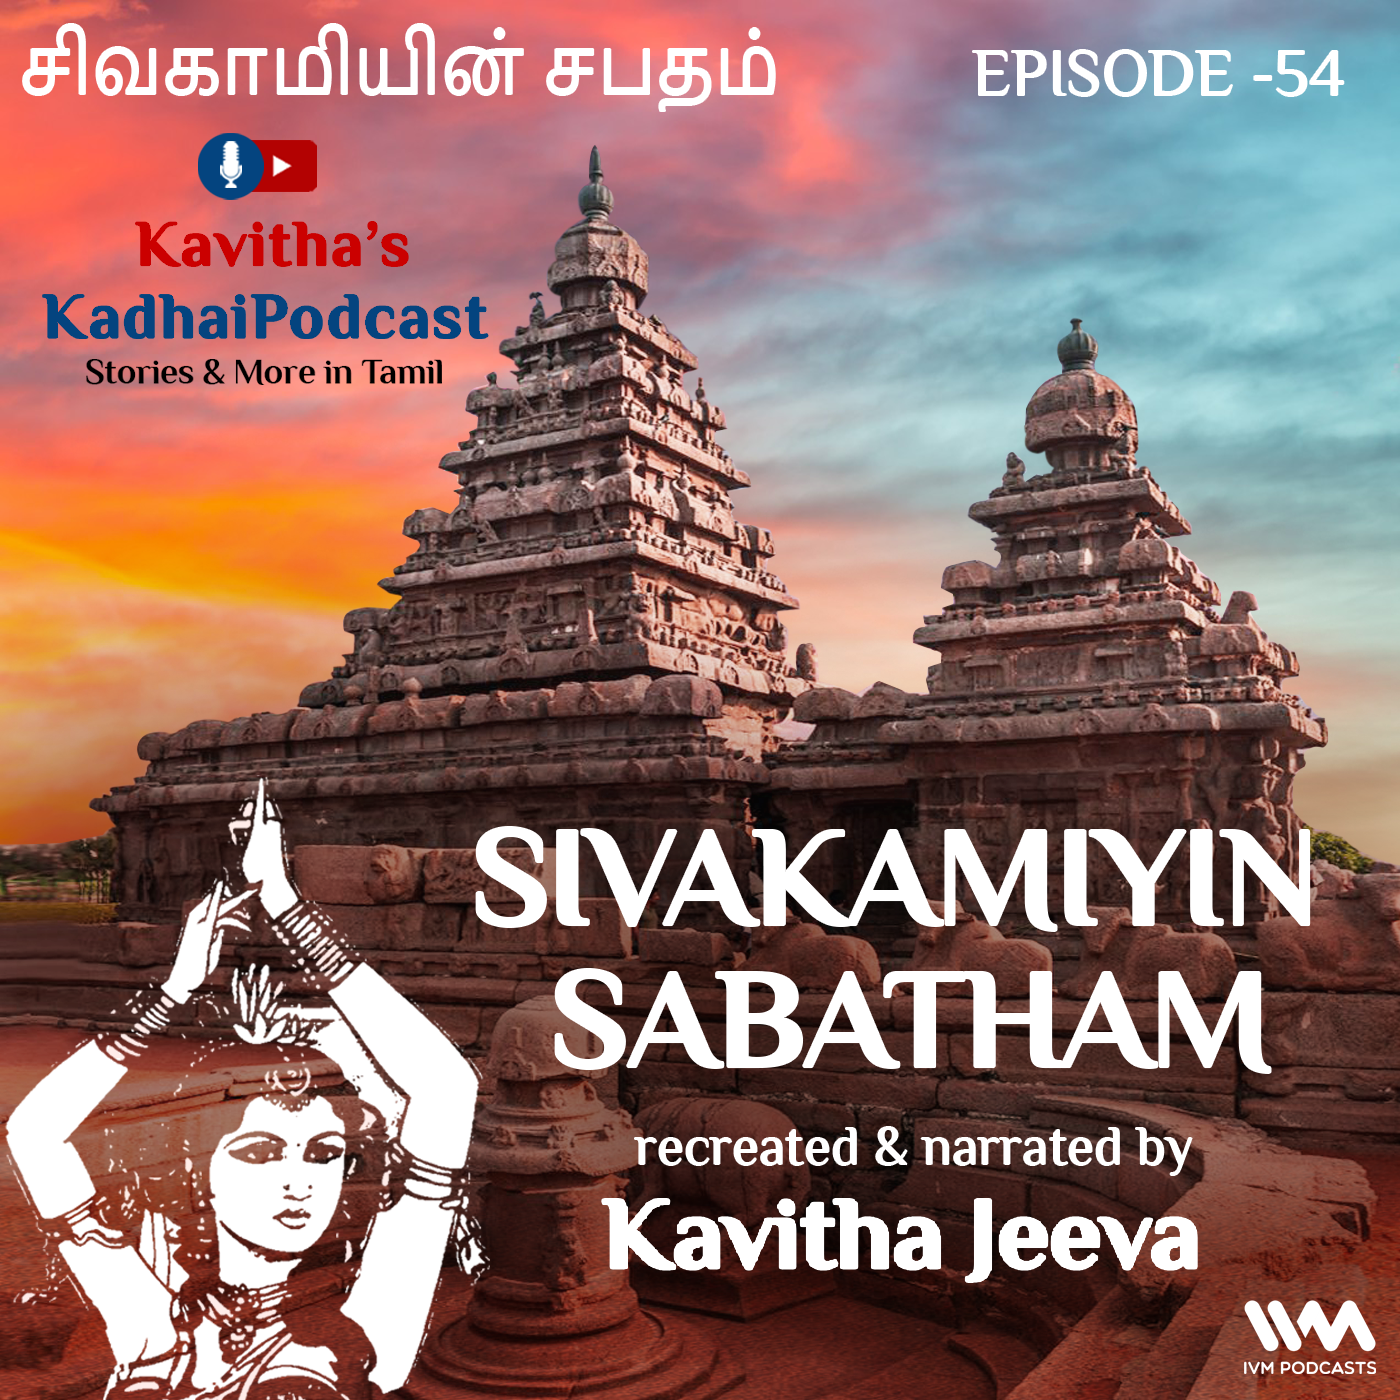 KadhaiPodcast's Sivakamiyin Sabatham - Episode # 54